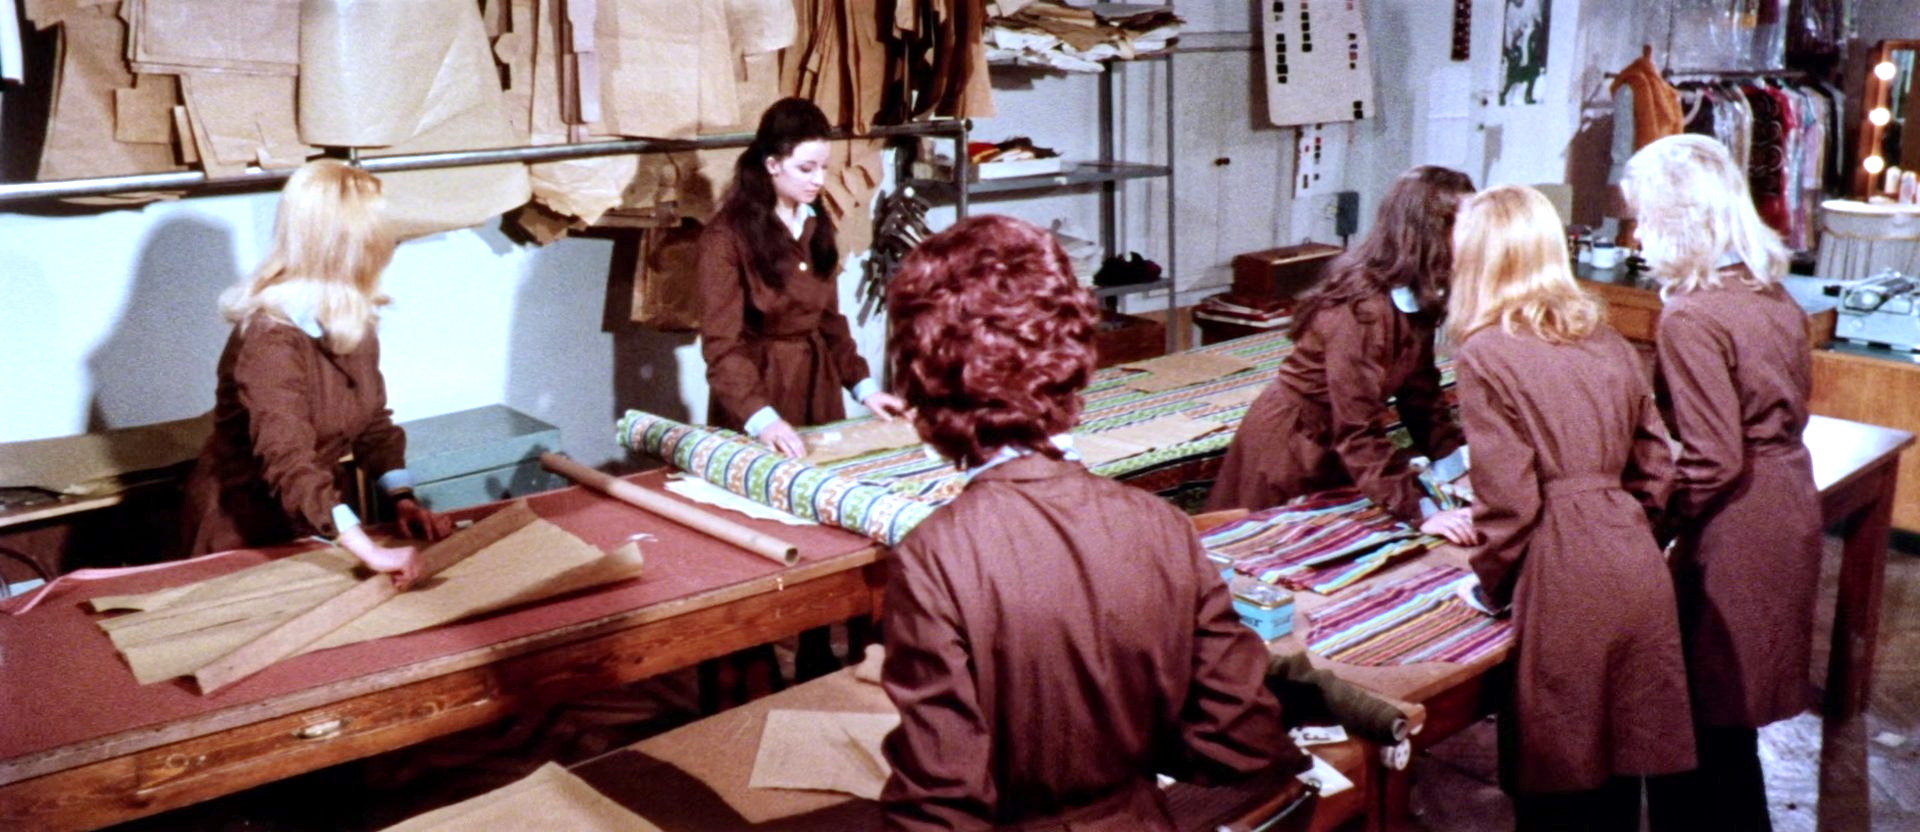 7 scialli di seta gialla (1972) Atelier staffing 05.jpg